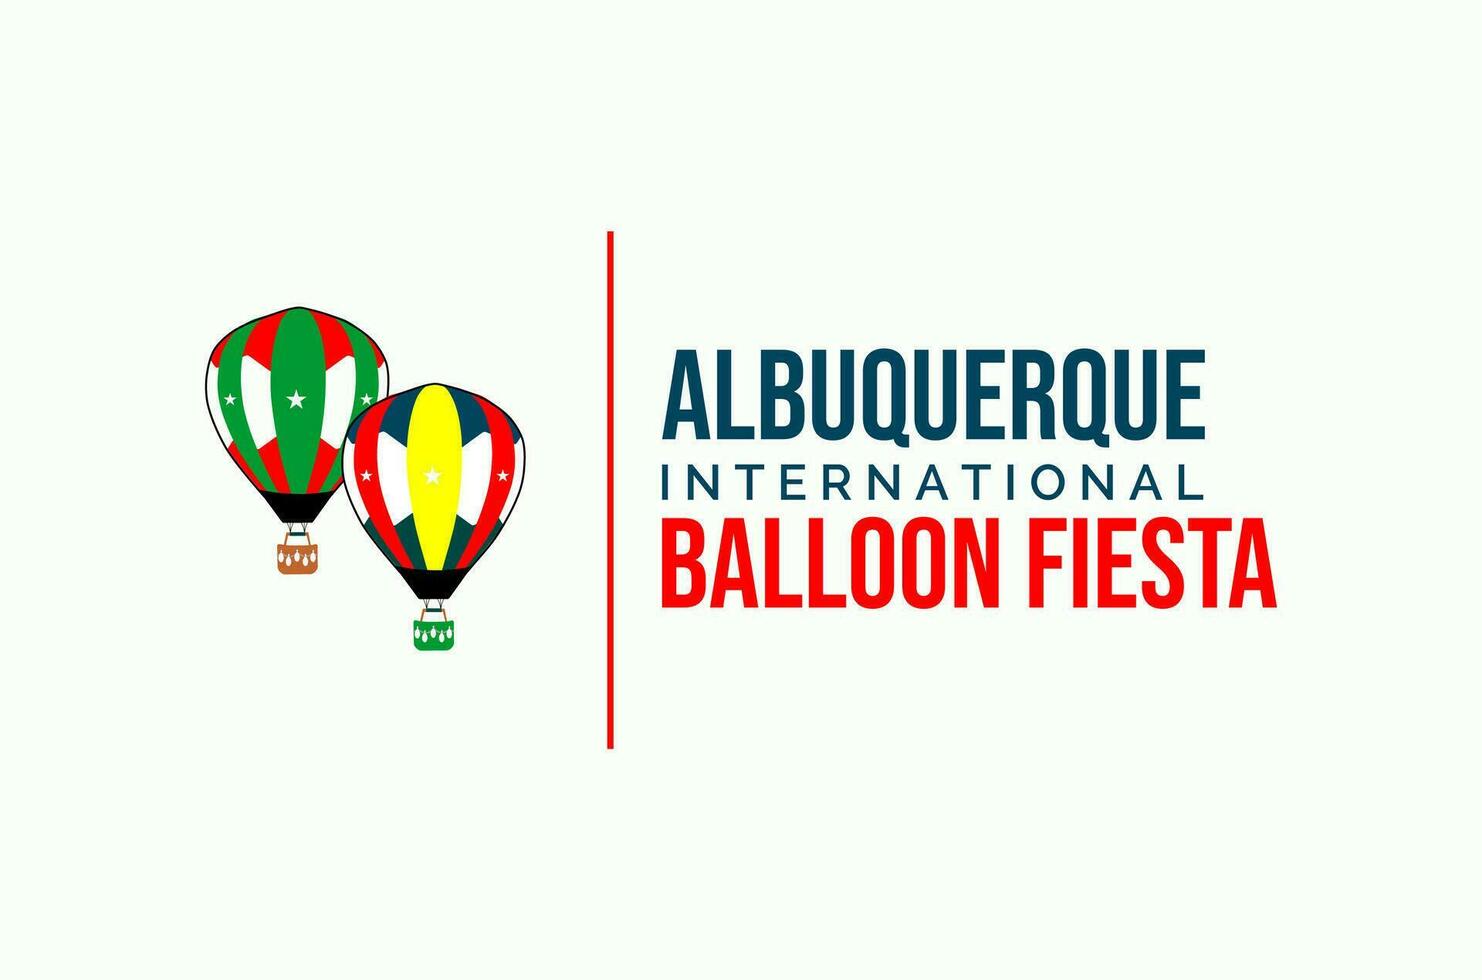 Albuquerque international ballon fête vecteur